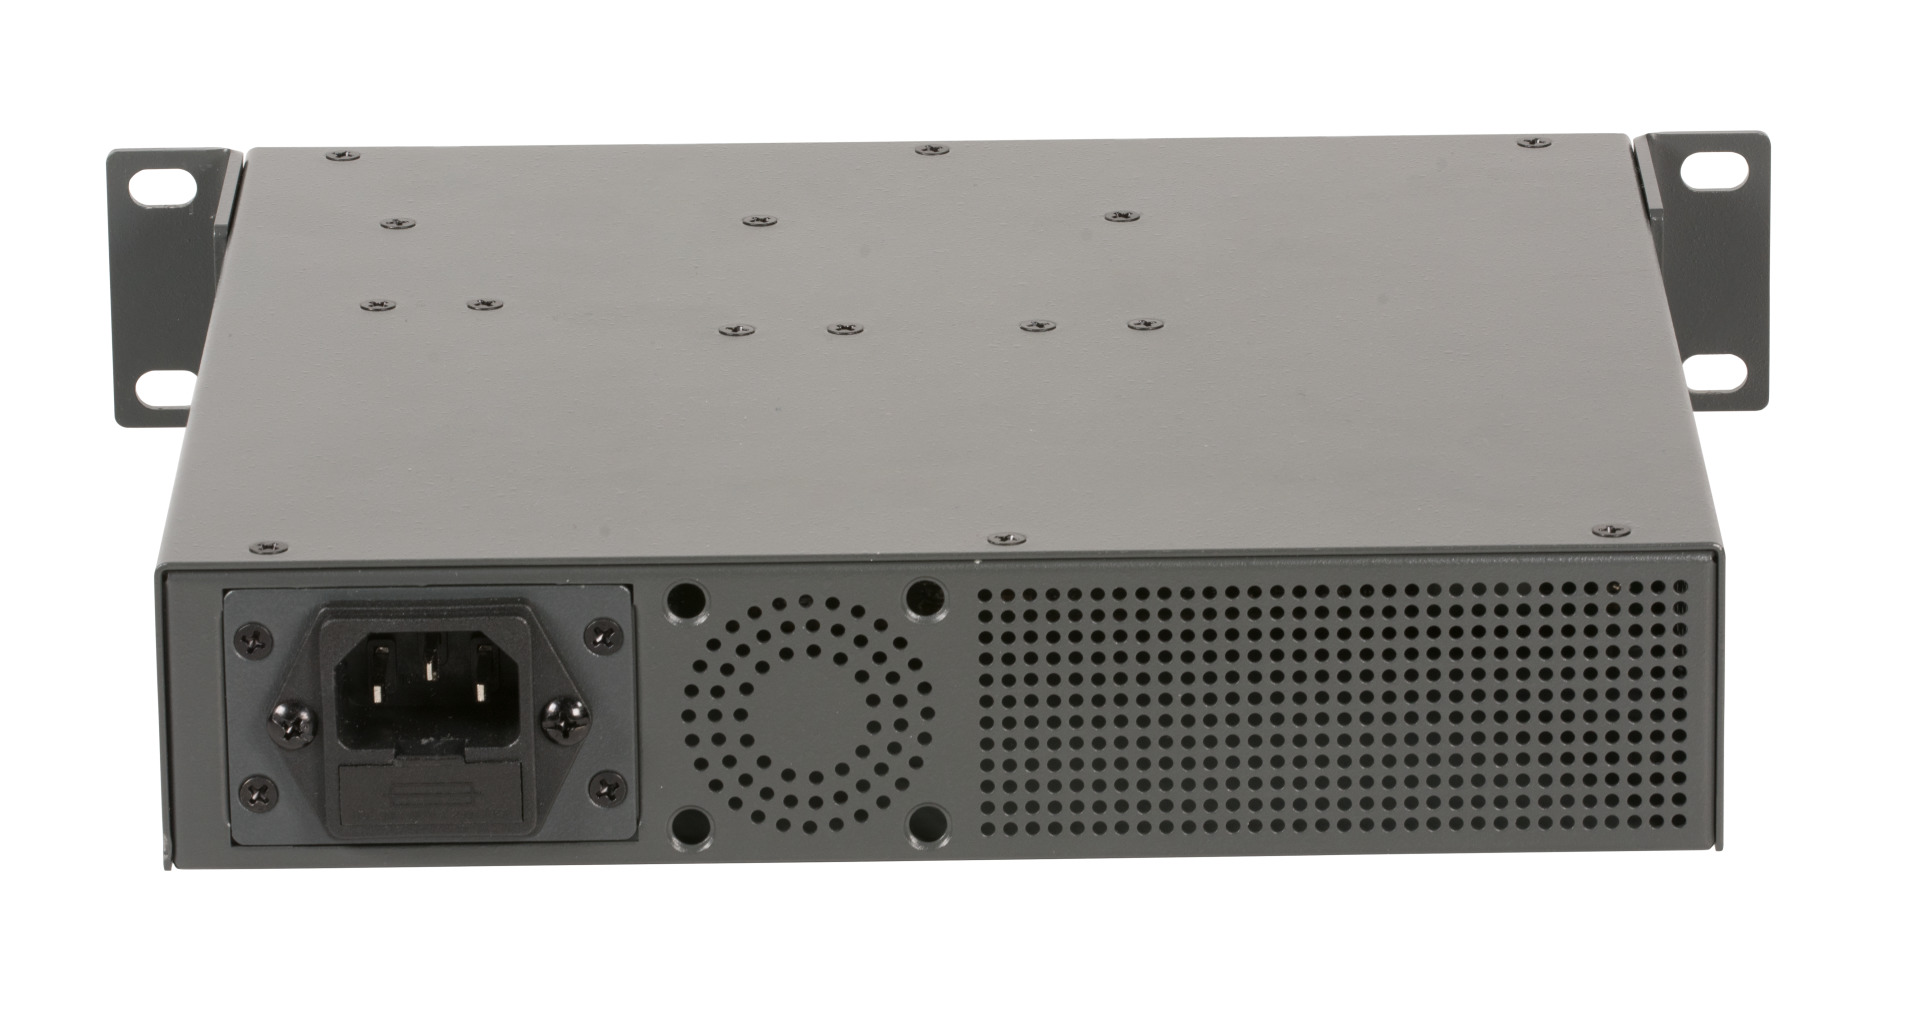 10-Port L2 Managed Gigabit Ethernet Fiber Switch, 8x GE SFP, 2x Combo RJ45/SFP